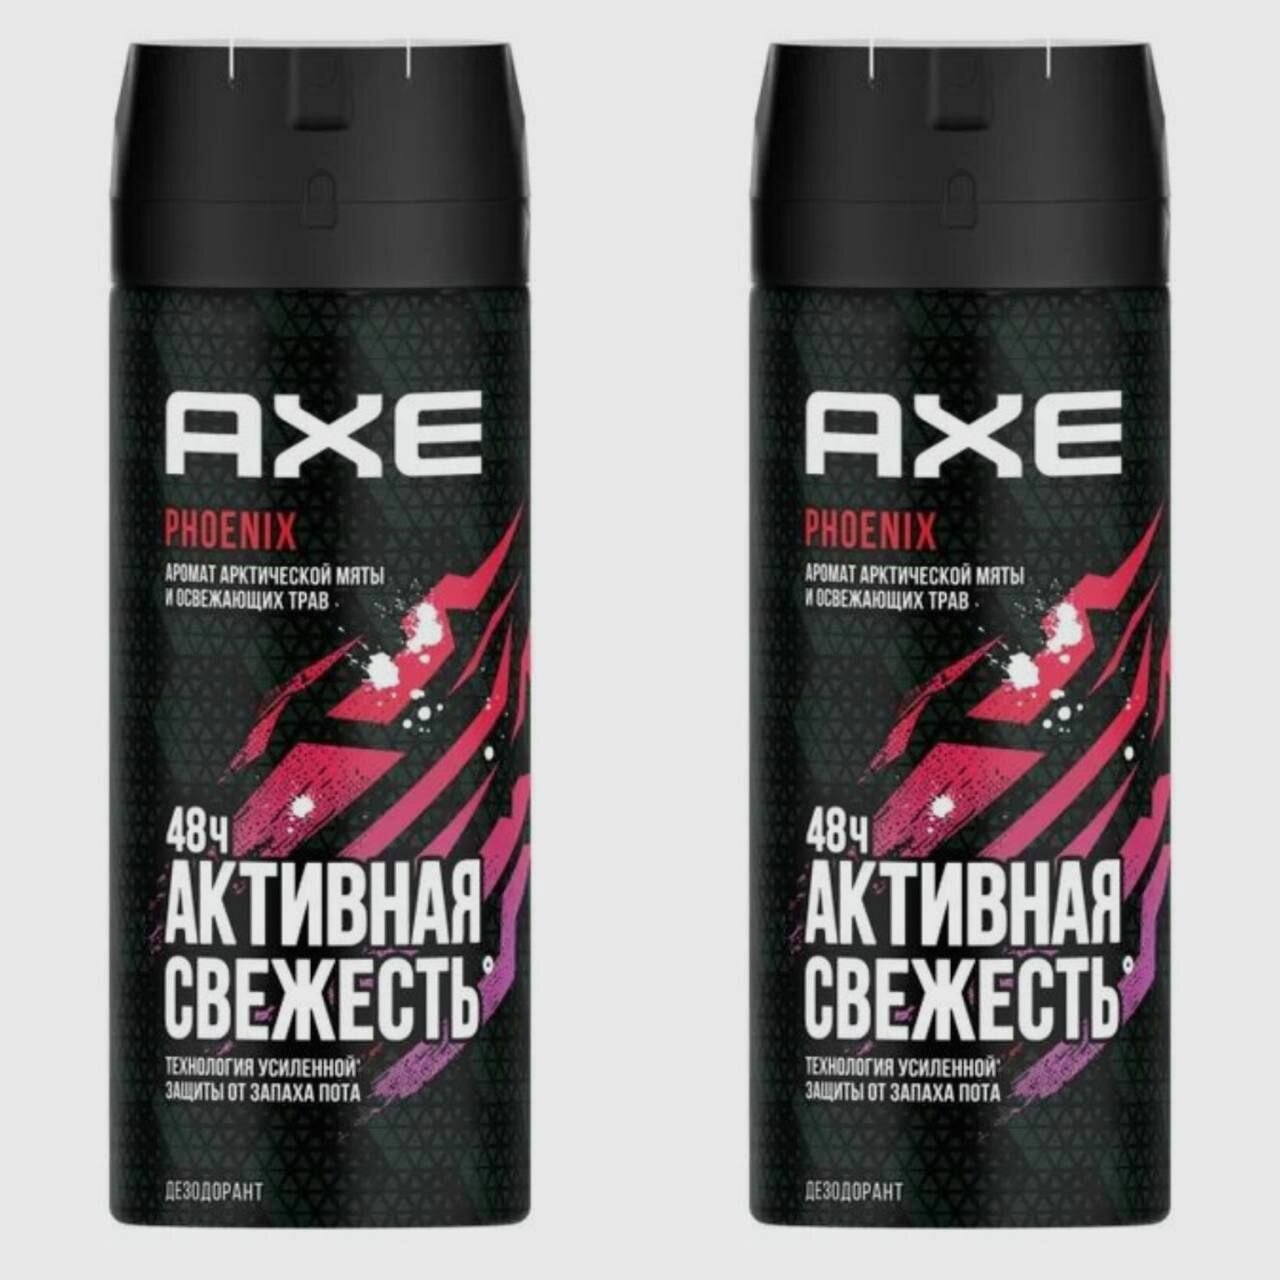 Комплект 2 шт. Axe Phoenix дезодорант спрей, мужской , 2 шт. по 150 мл.